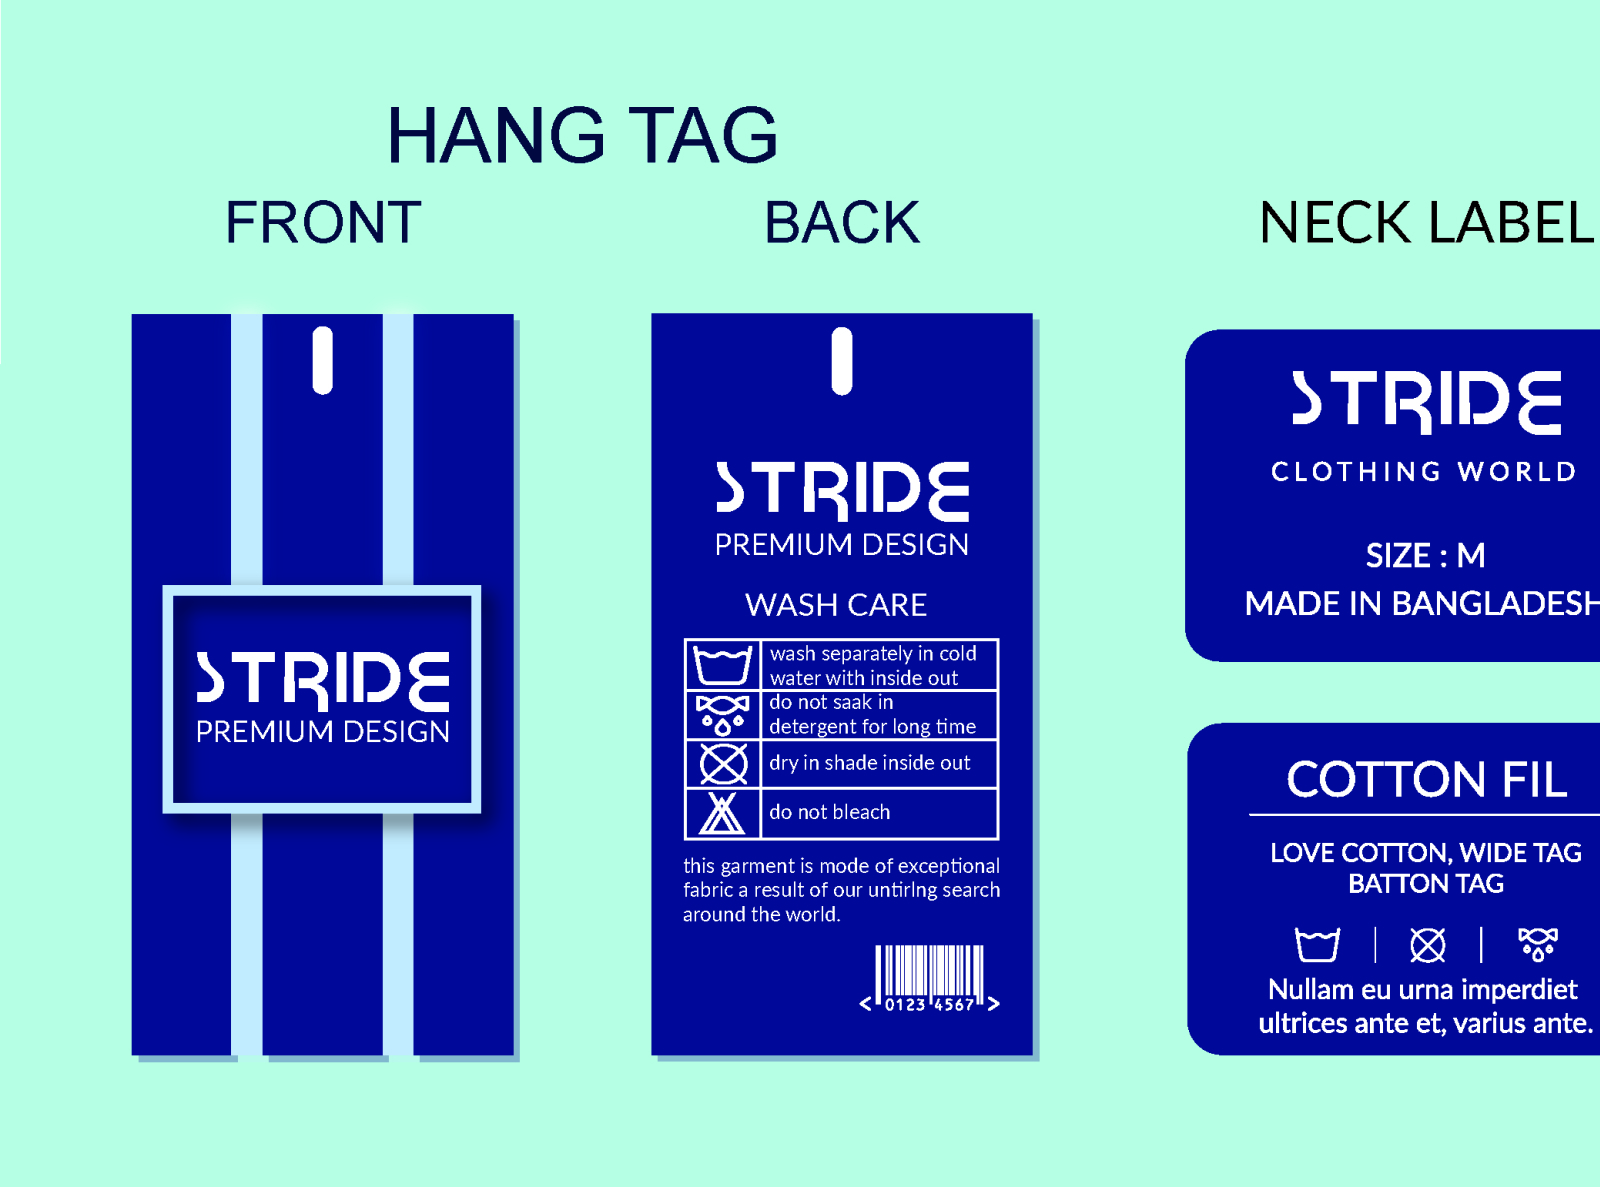 design clothing tag hang tag and clothing label